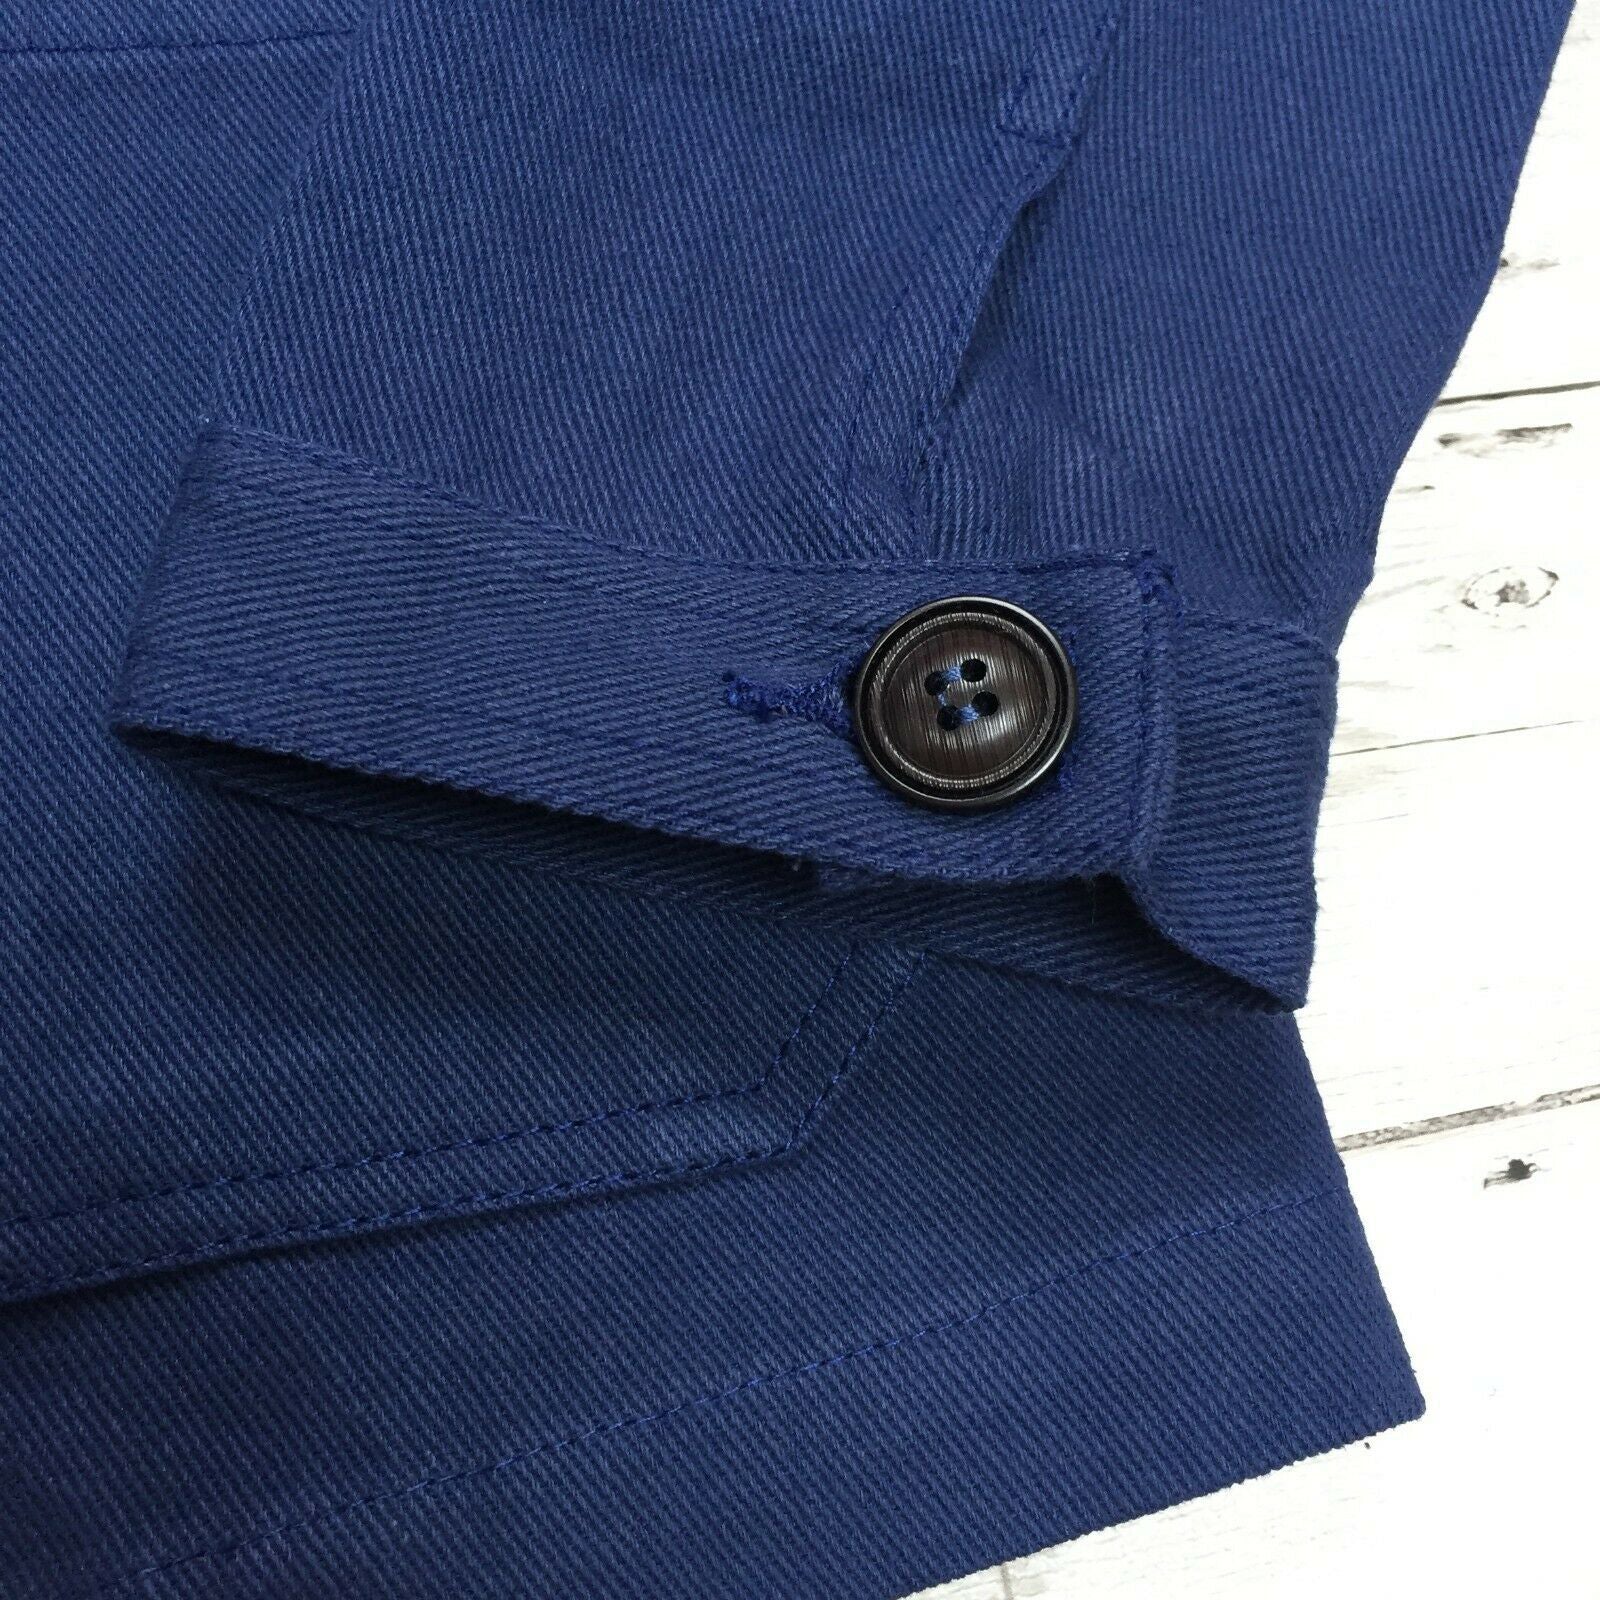 Wavelength Chore Jacket - Navy Blue